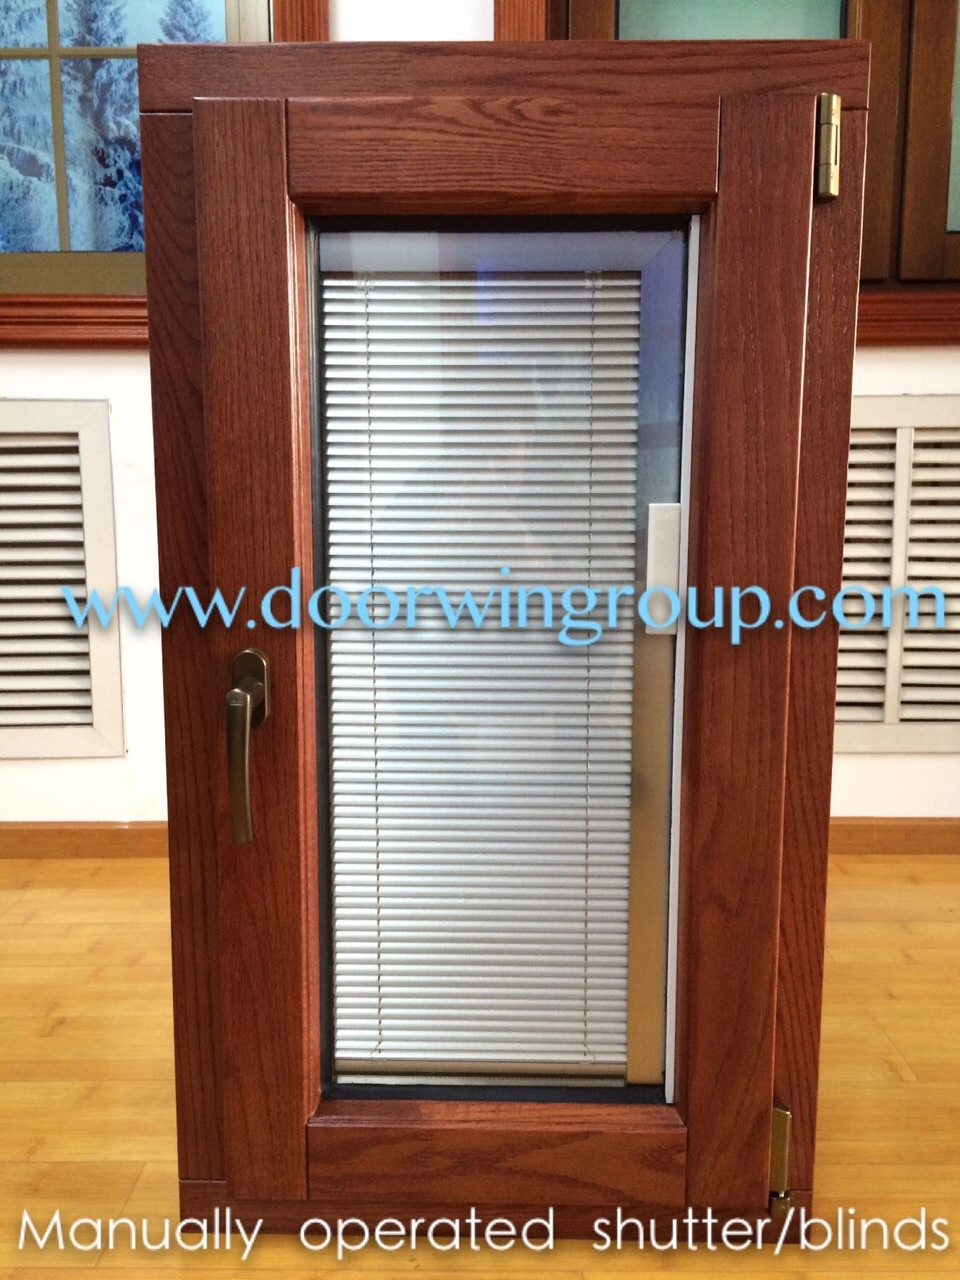 Wood Aluminium Window with Internal Shutters, Aluminium Windows with Solid Wood Cladding (Built-In Shutter)